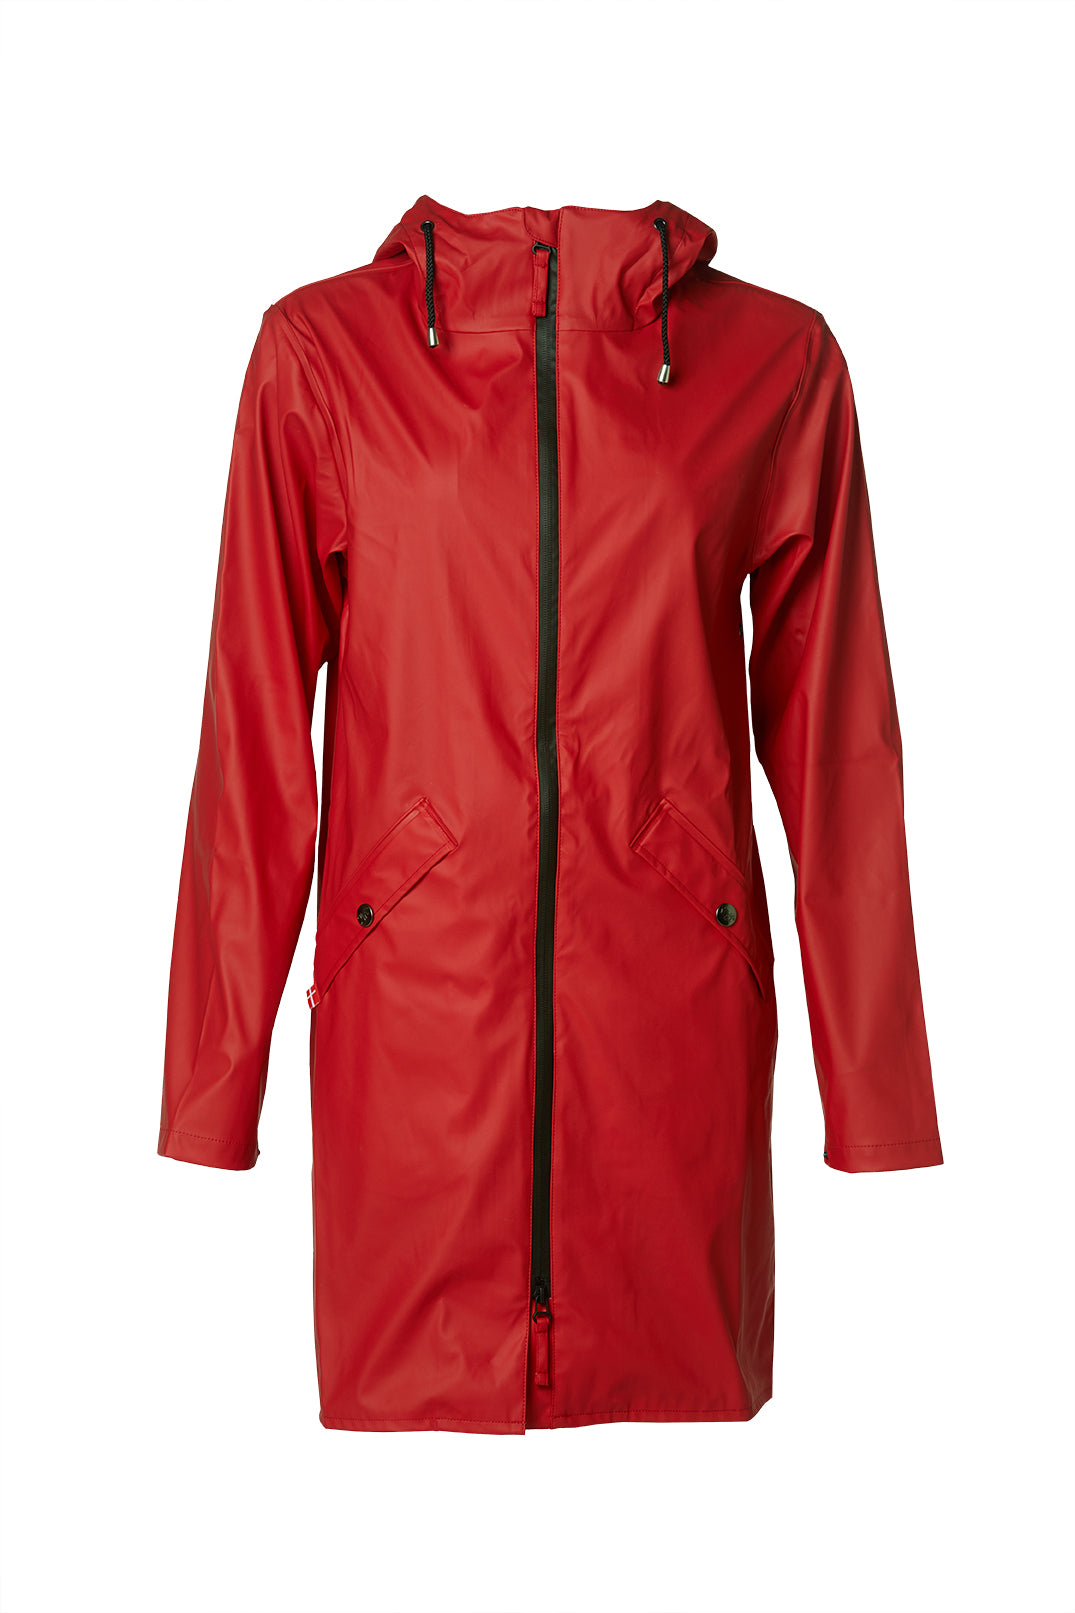 Windfield / Danwear Liesa Raincoat 16 Red.